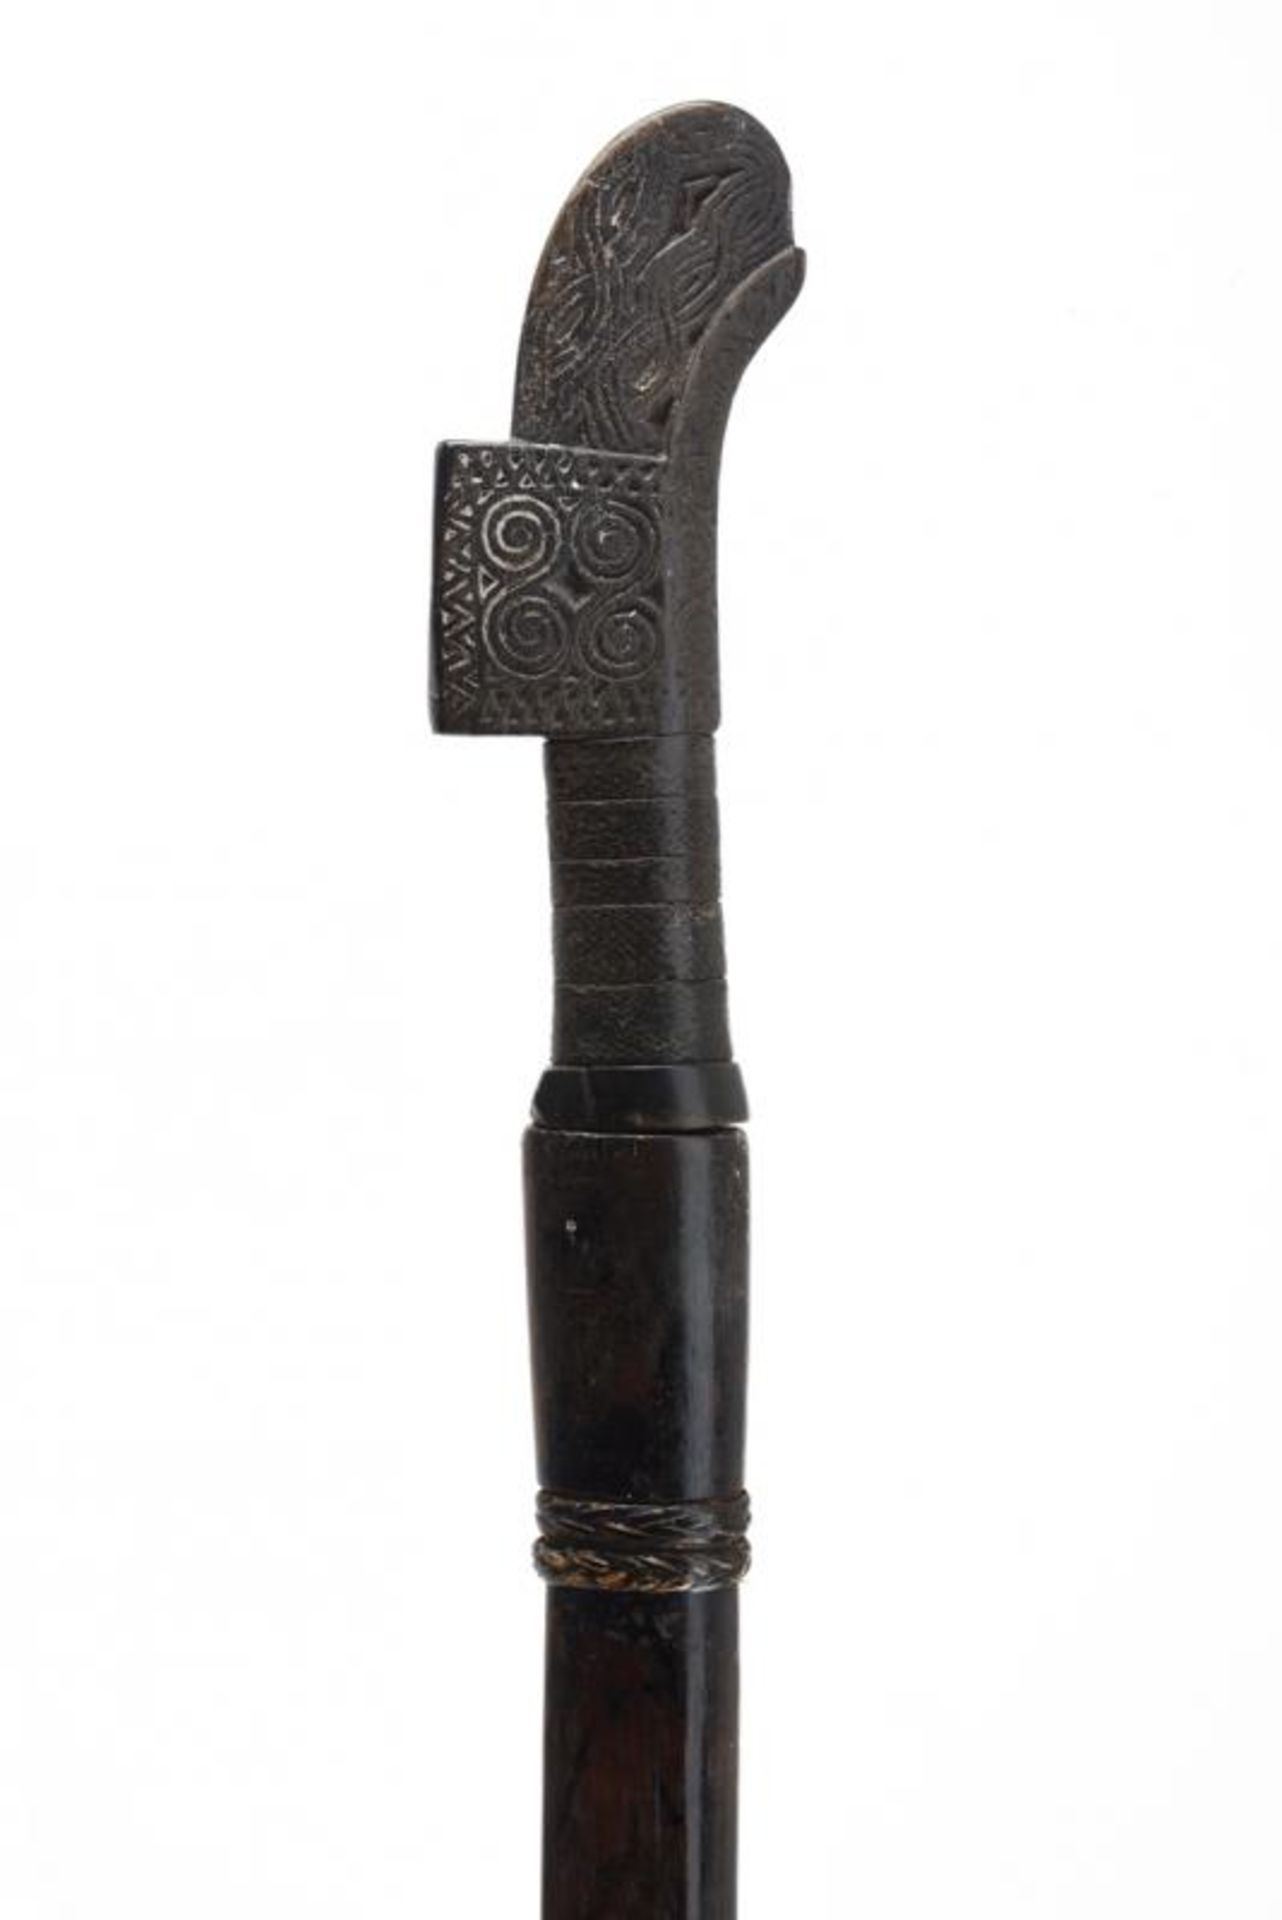 A La-bo (sword) of the Toraja people - Bild 3 aus 5